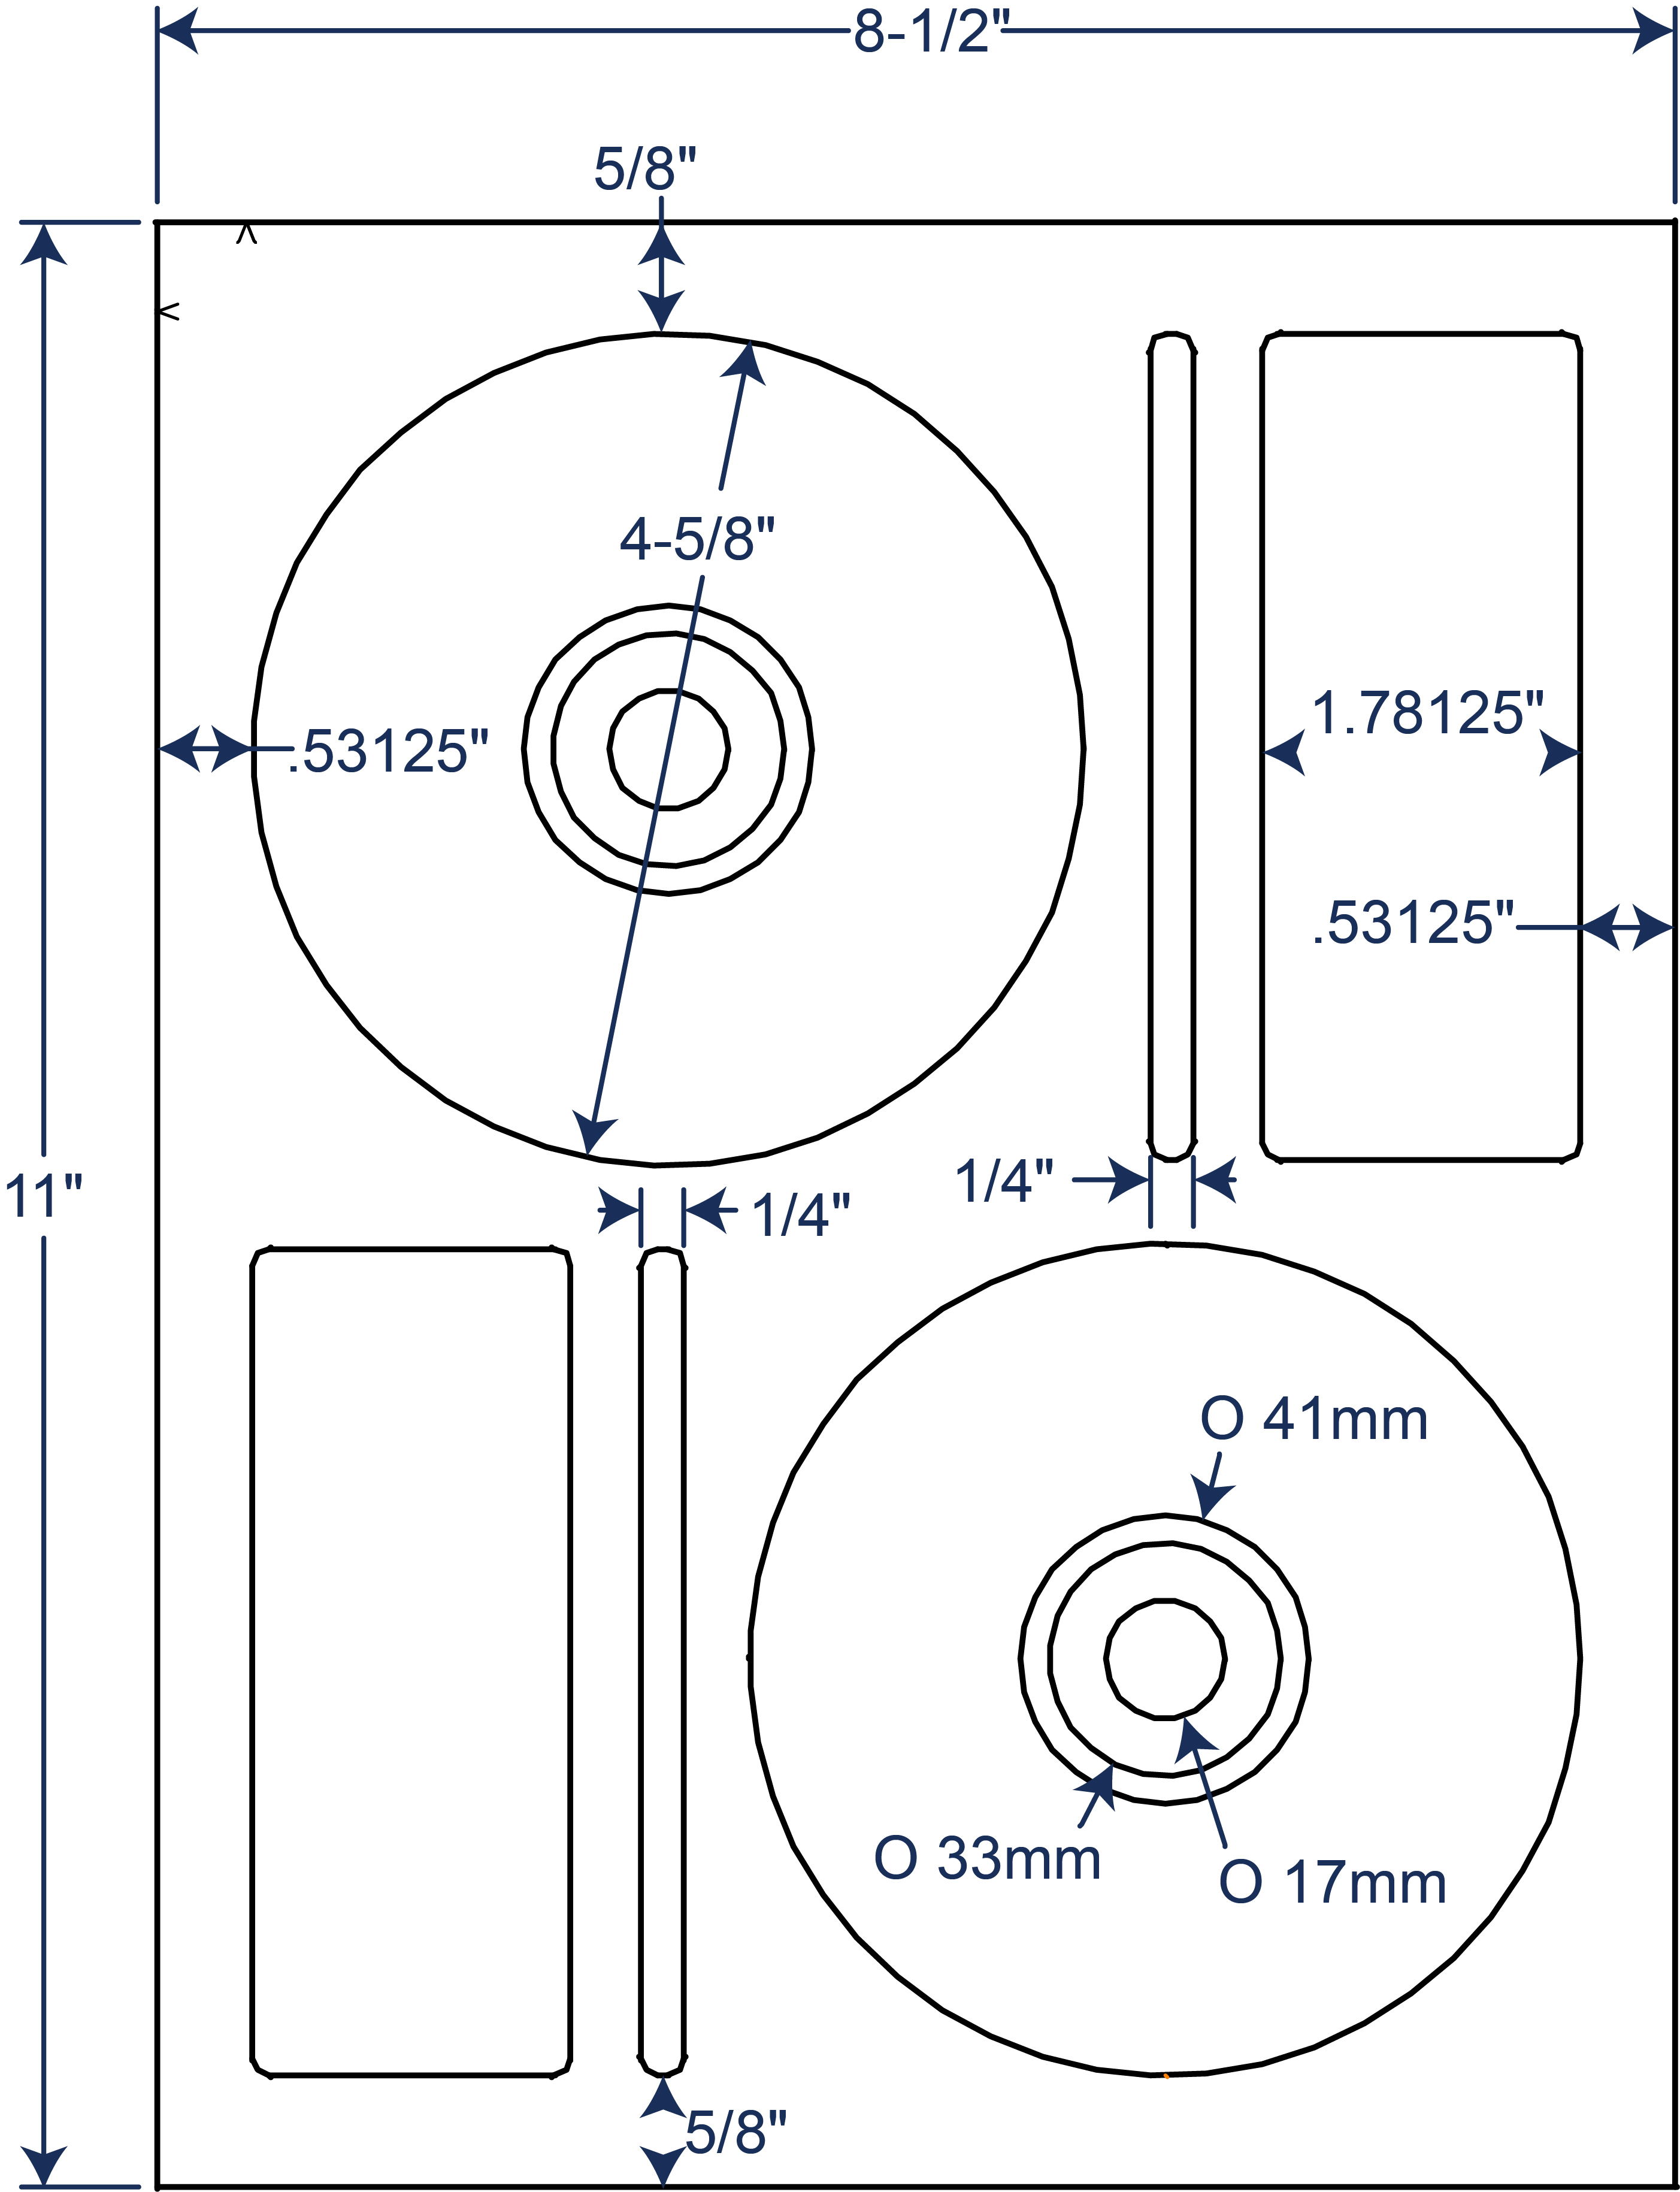 4-5/8" Diameter Laser/Inkjet Memorex CD Donut with Hub Cap Labels